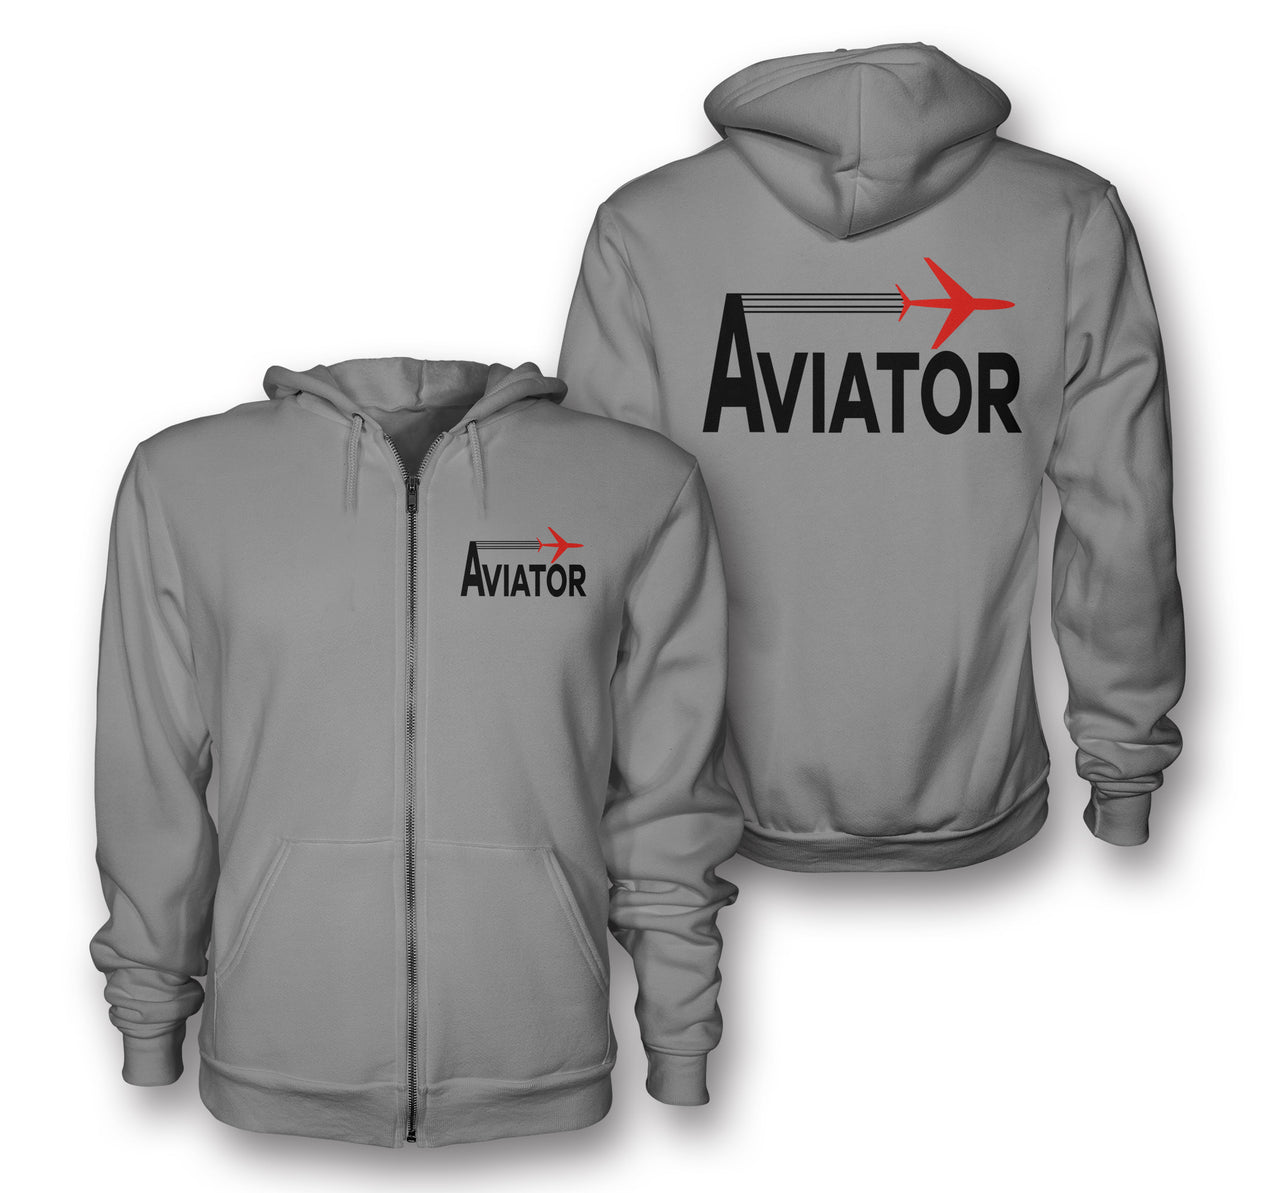 Aviator Designed Zipped Hoodies